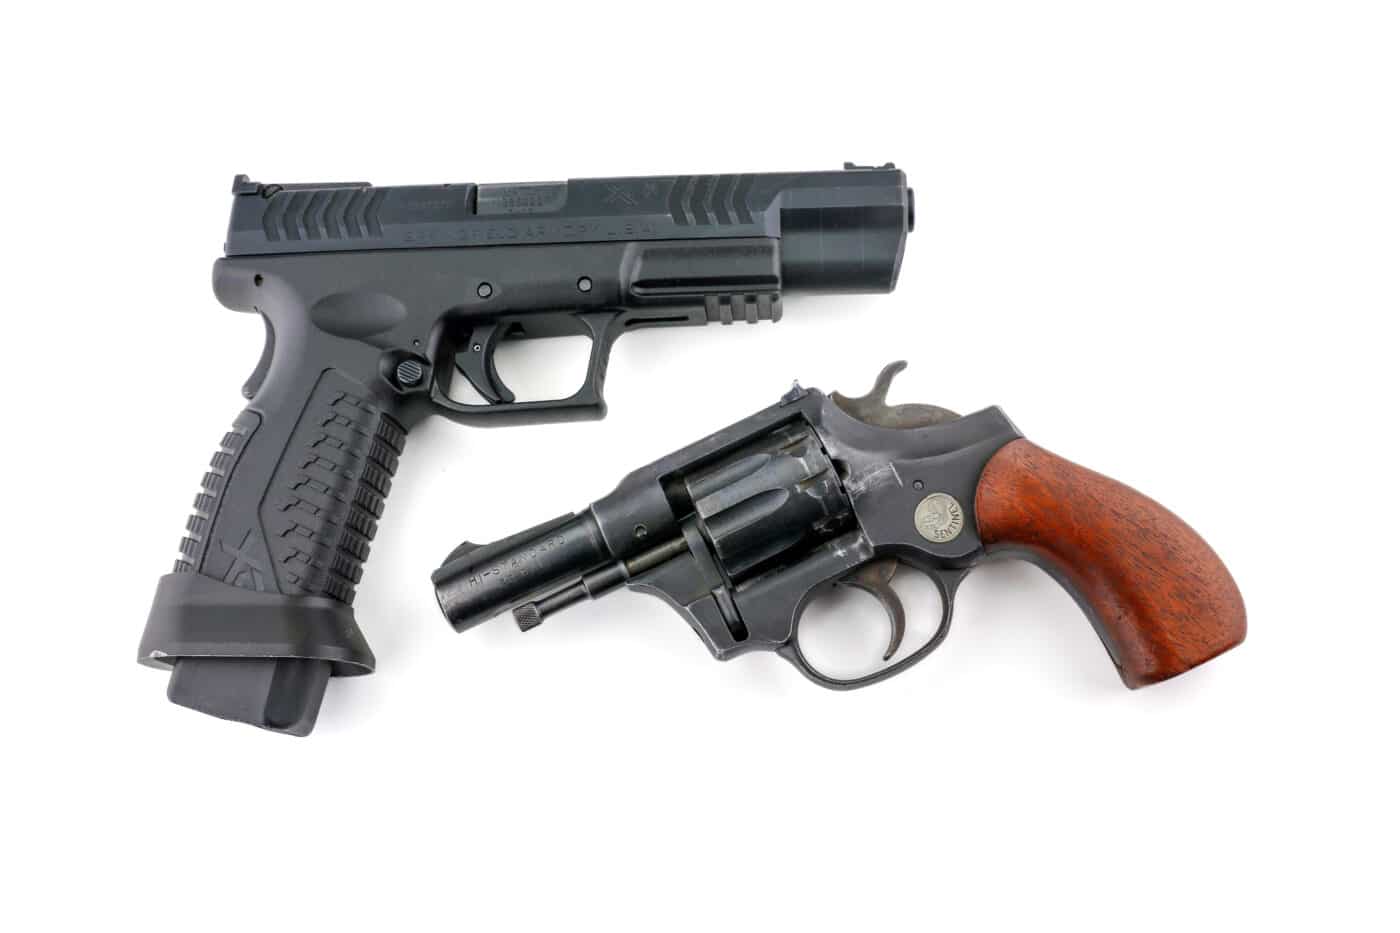 Semiauto pistol next to a revolver